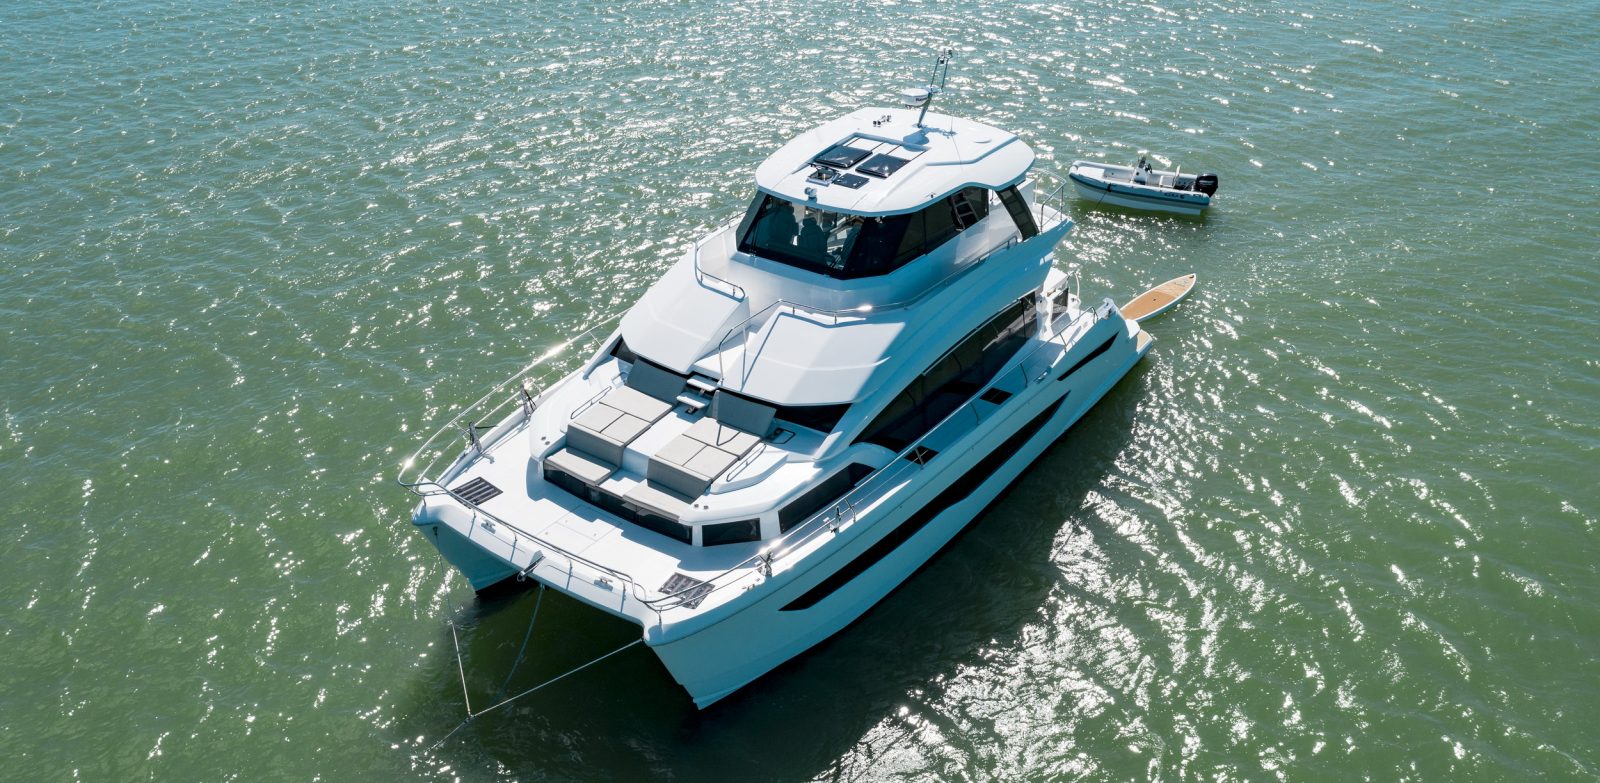 aquila 54 power catamaran for sale